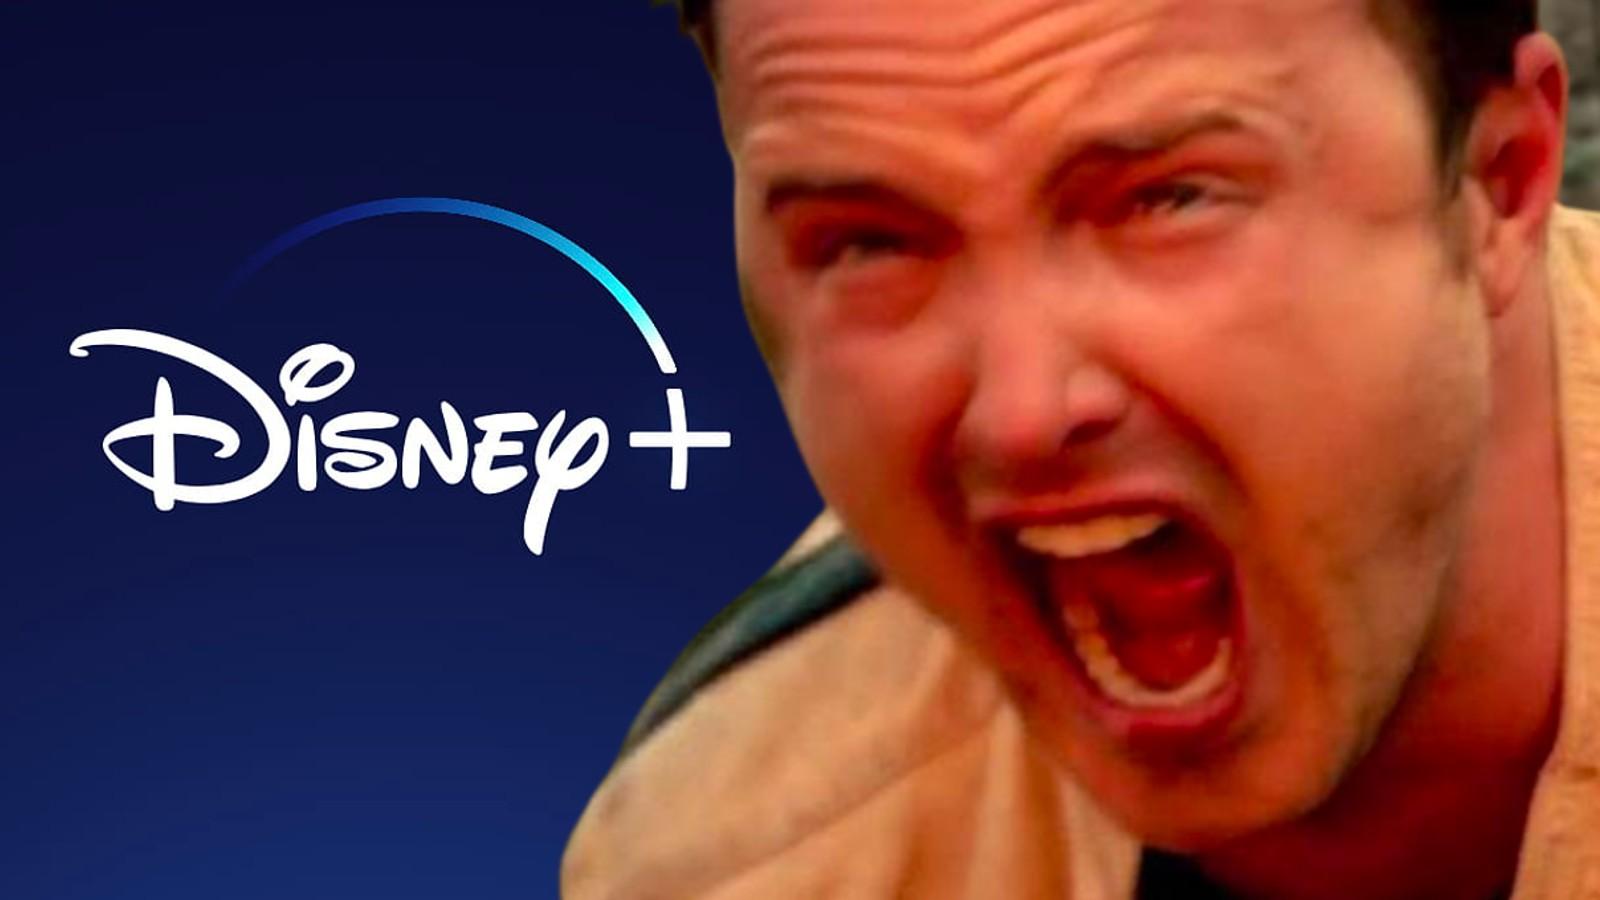 The Disney Plus logo and the Aaron Paul screaming meme